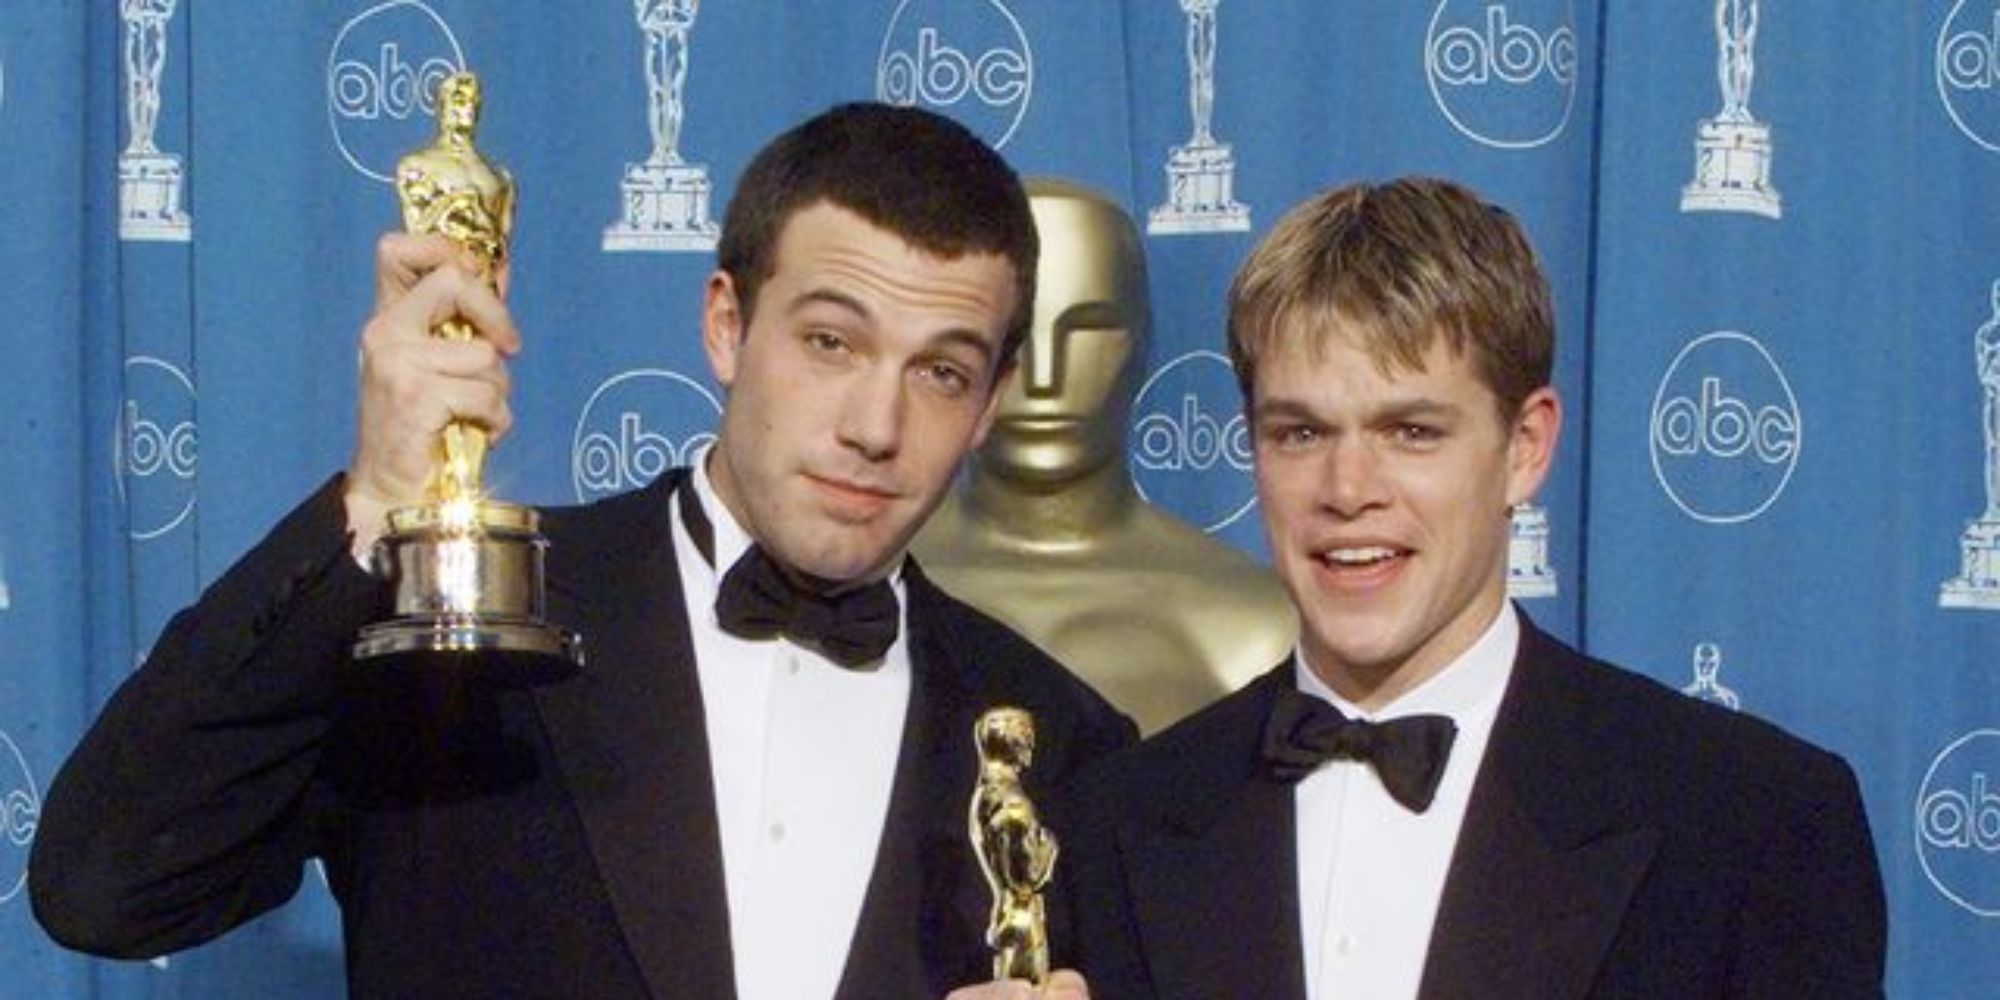 Two men posing with their Oscar